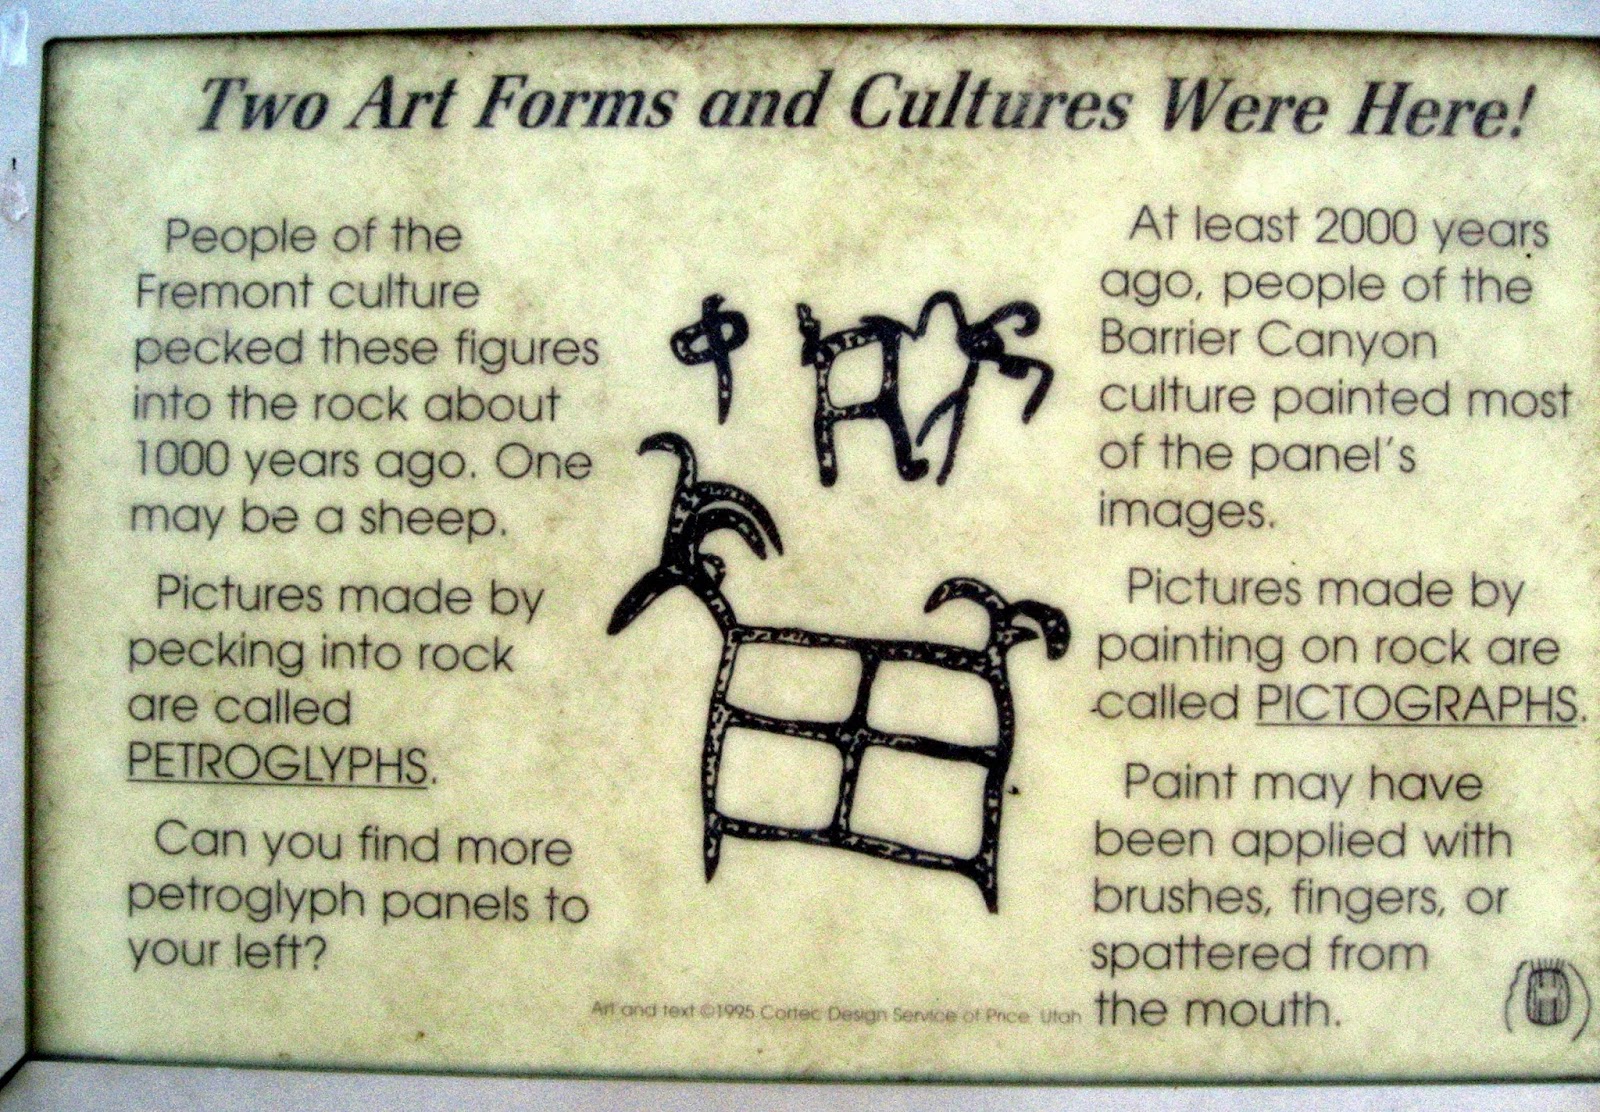 Petroglyphs vs Pictographs